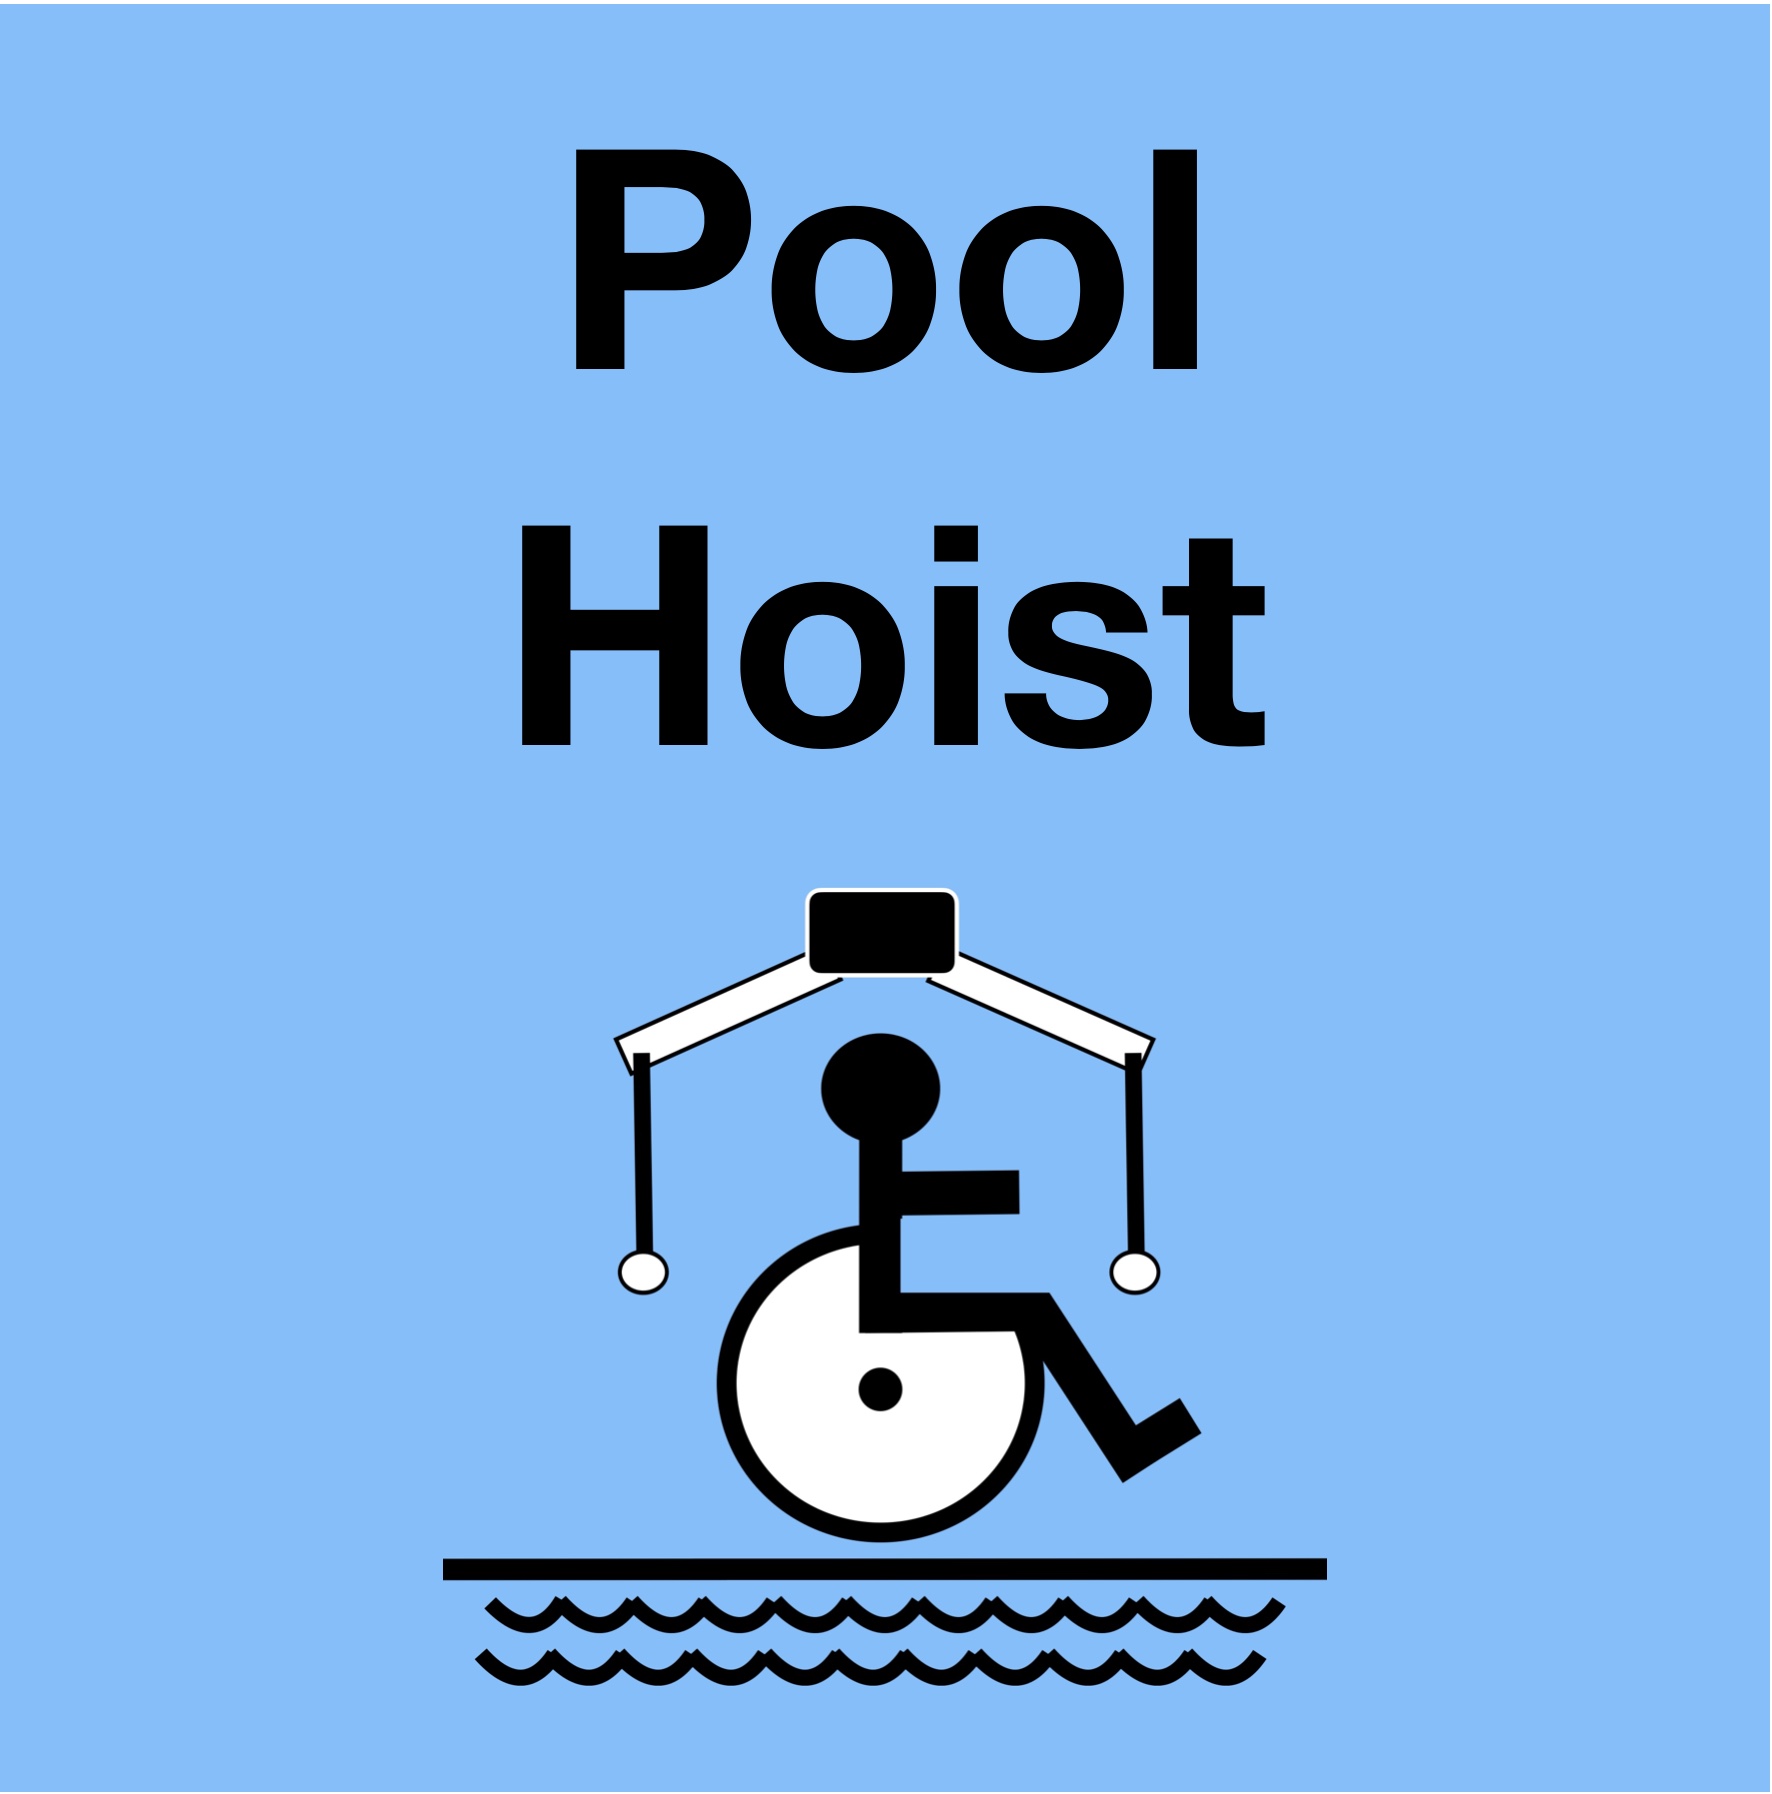 Swimming Pool Hoist In Ocean Cruising